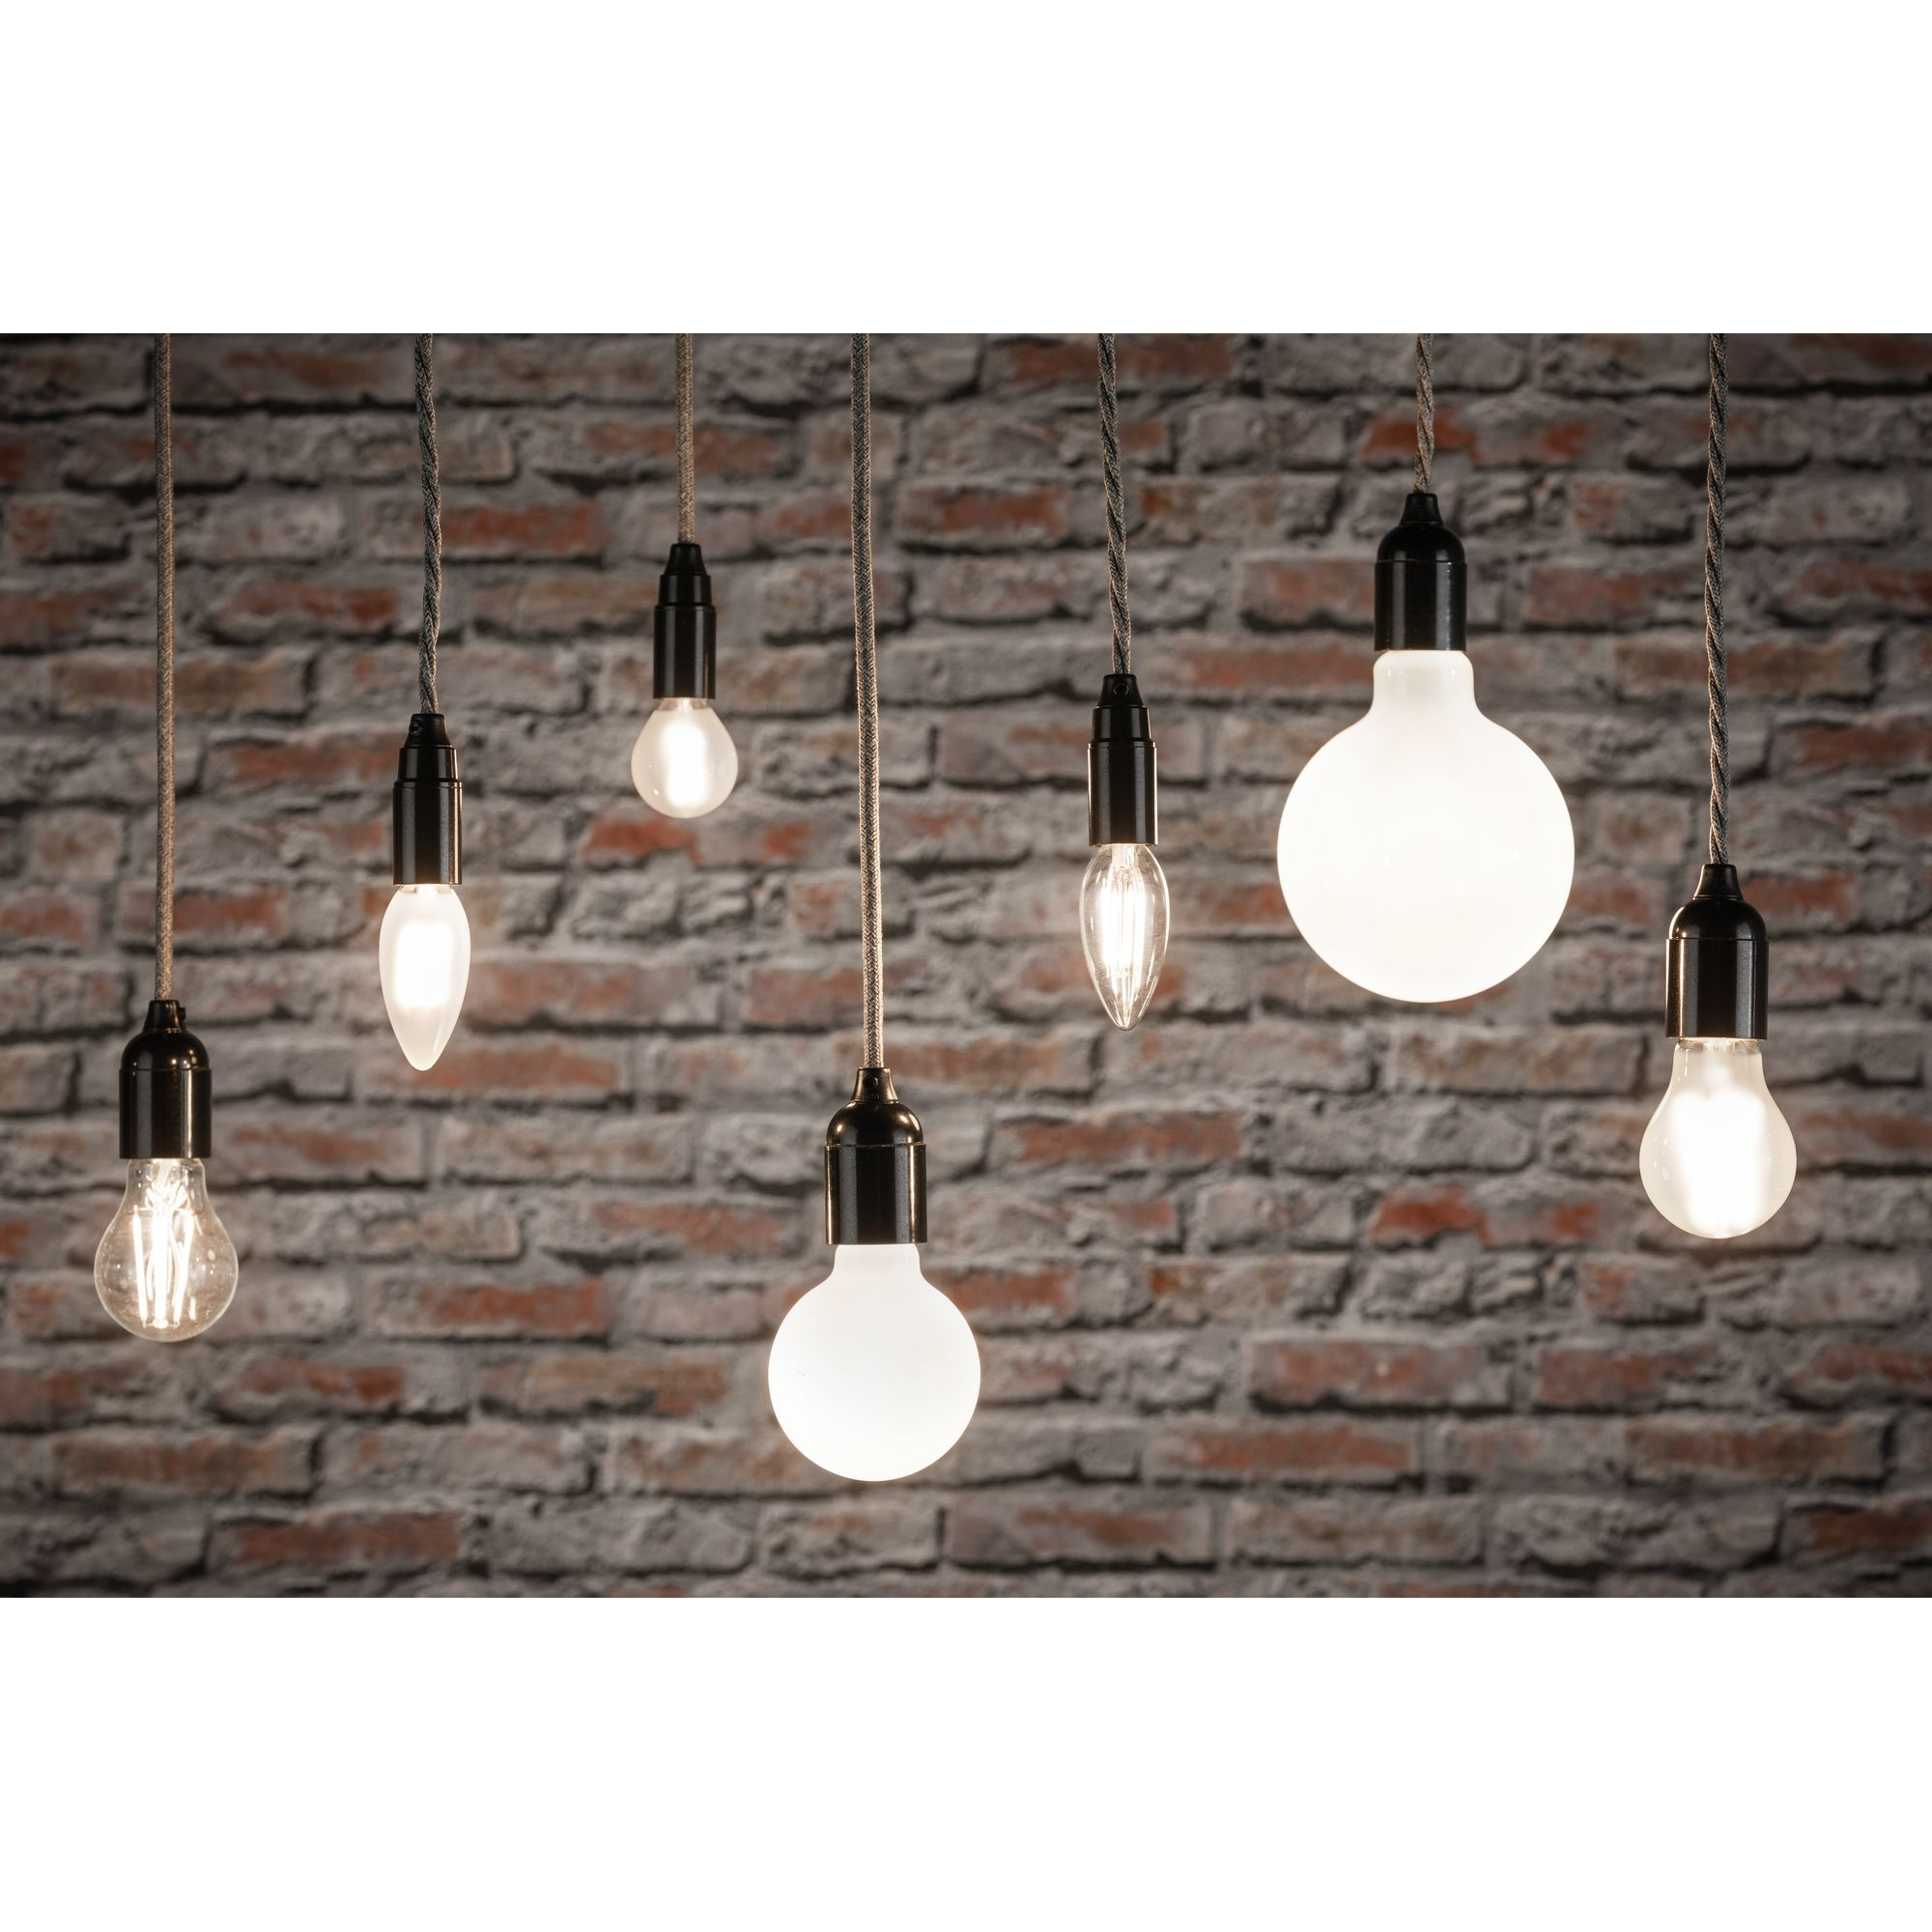 LED-Kerzenlampe E14 5W (40W) 470 lm warmweiß matt + product picture